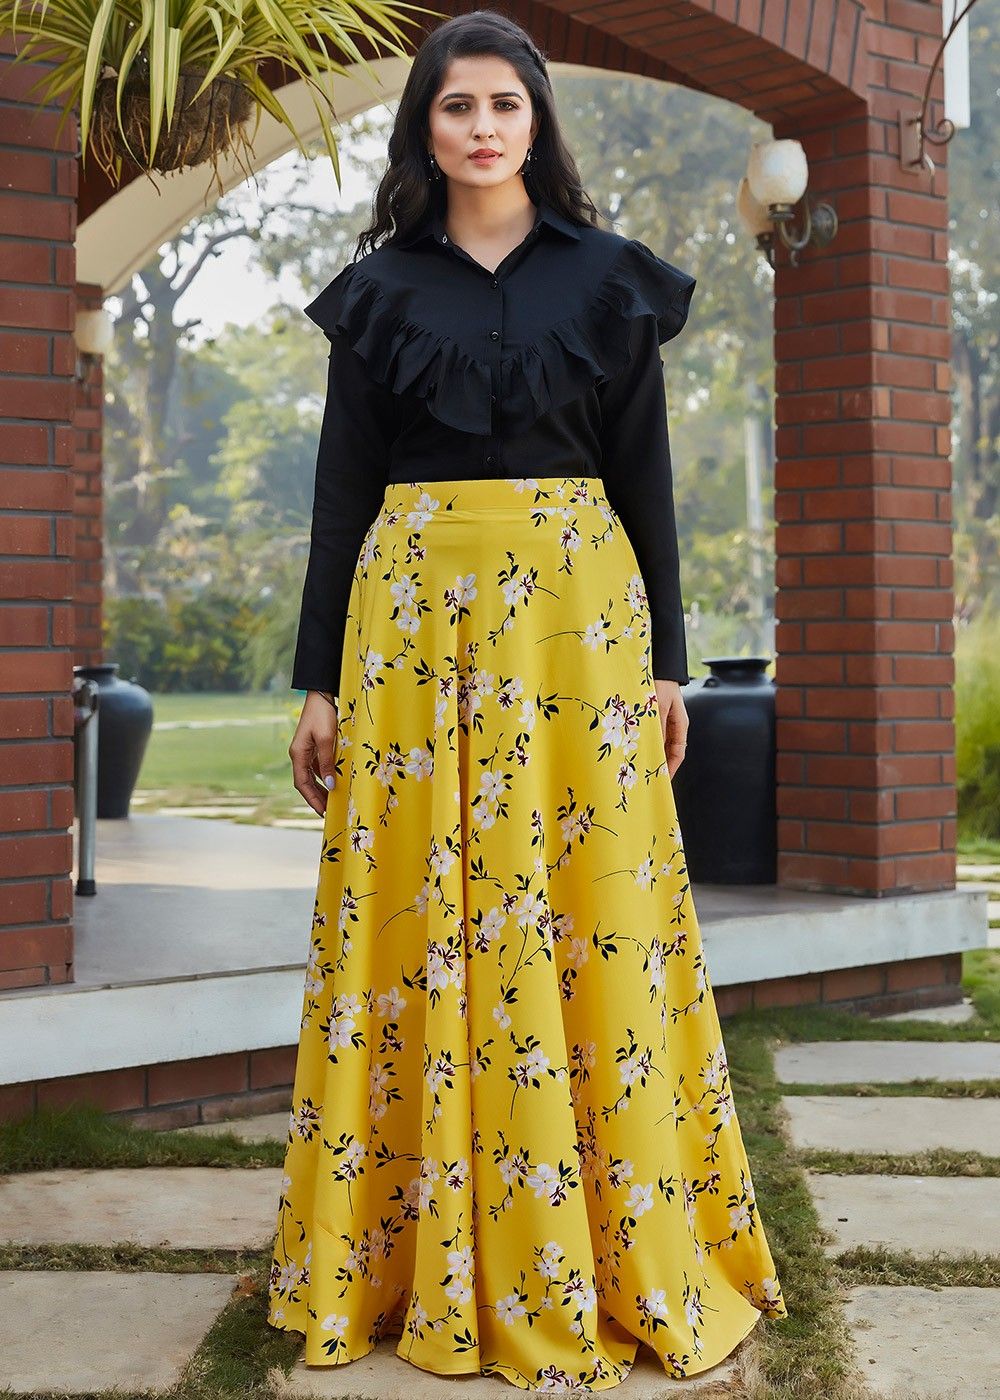 Aggregate more than 76 long black floral skirt